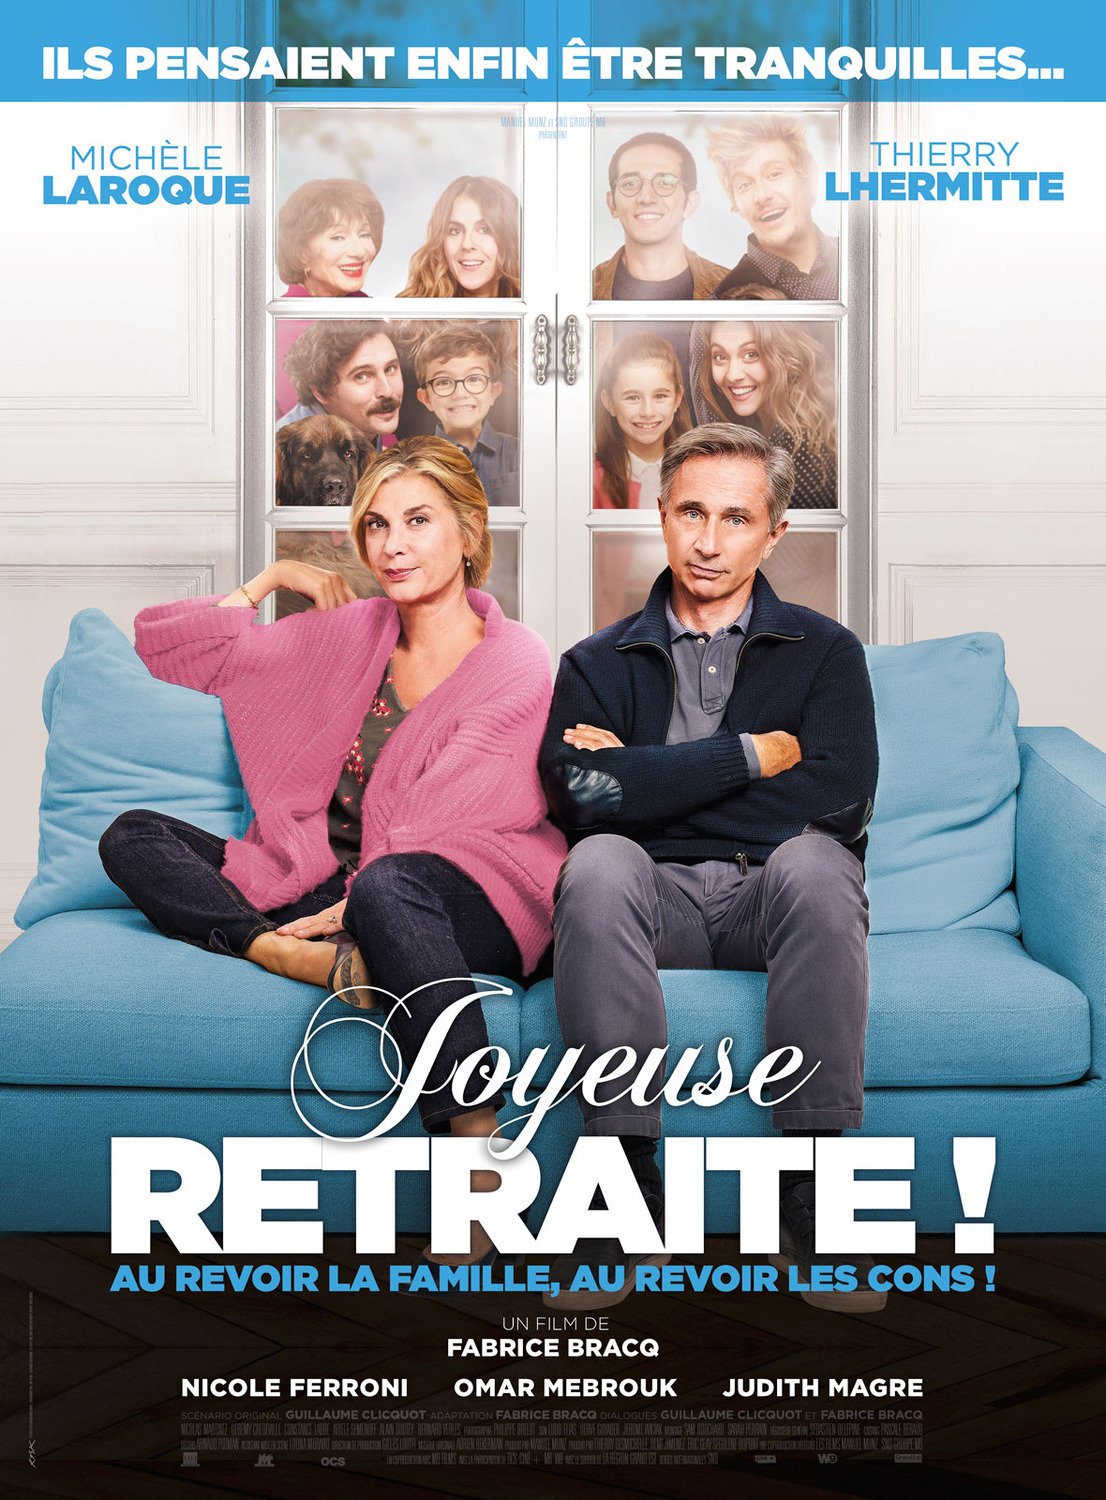 Extra Large Movie Poster Image for Joyeuse retraite! 